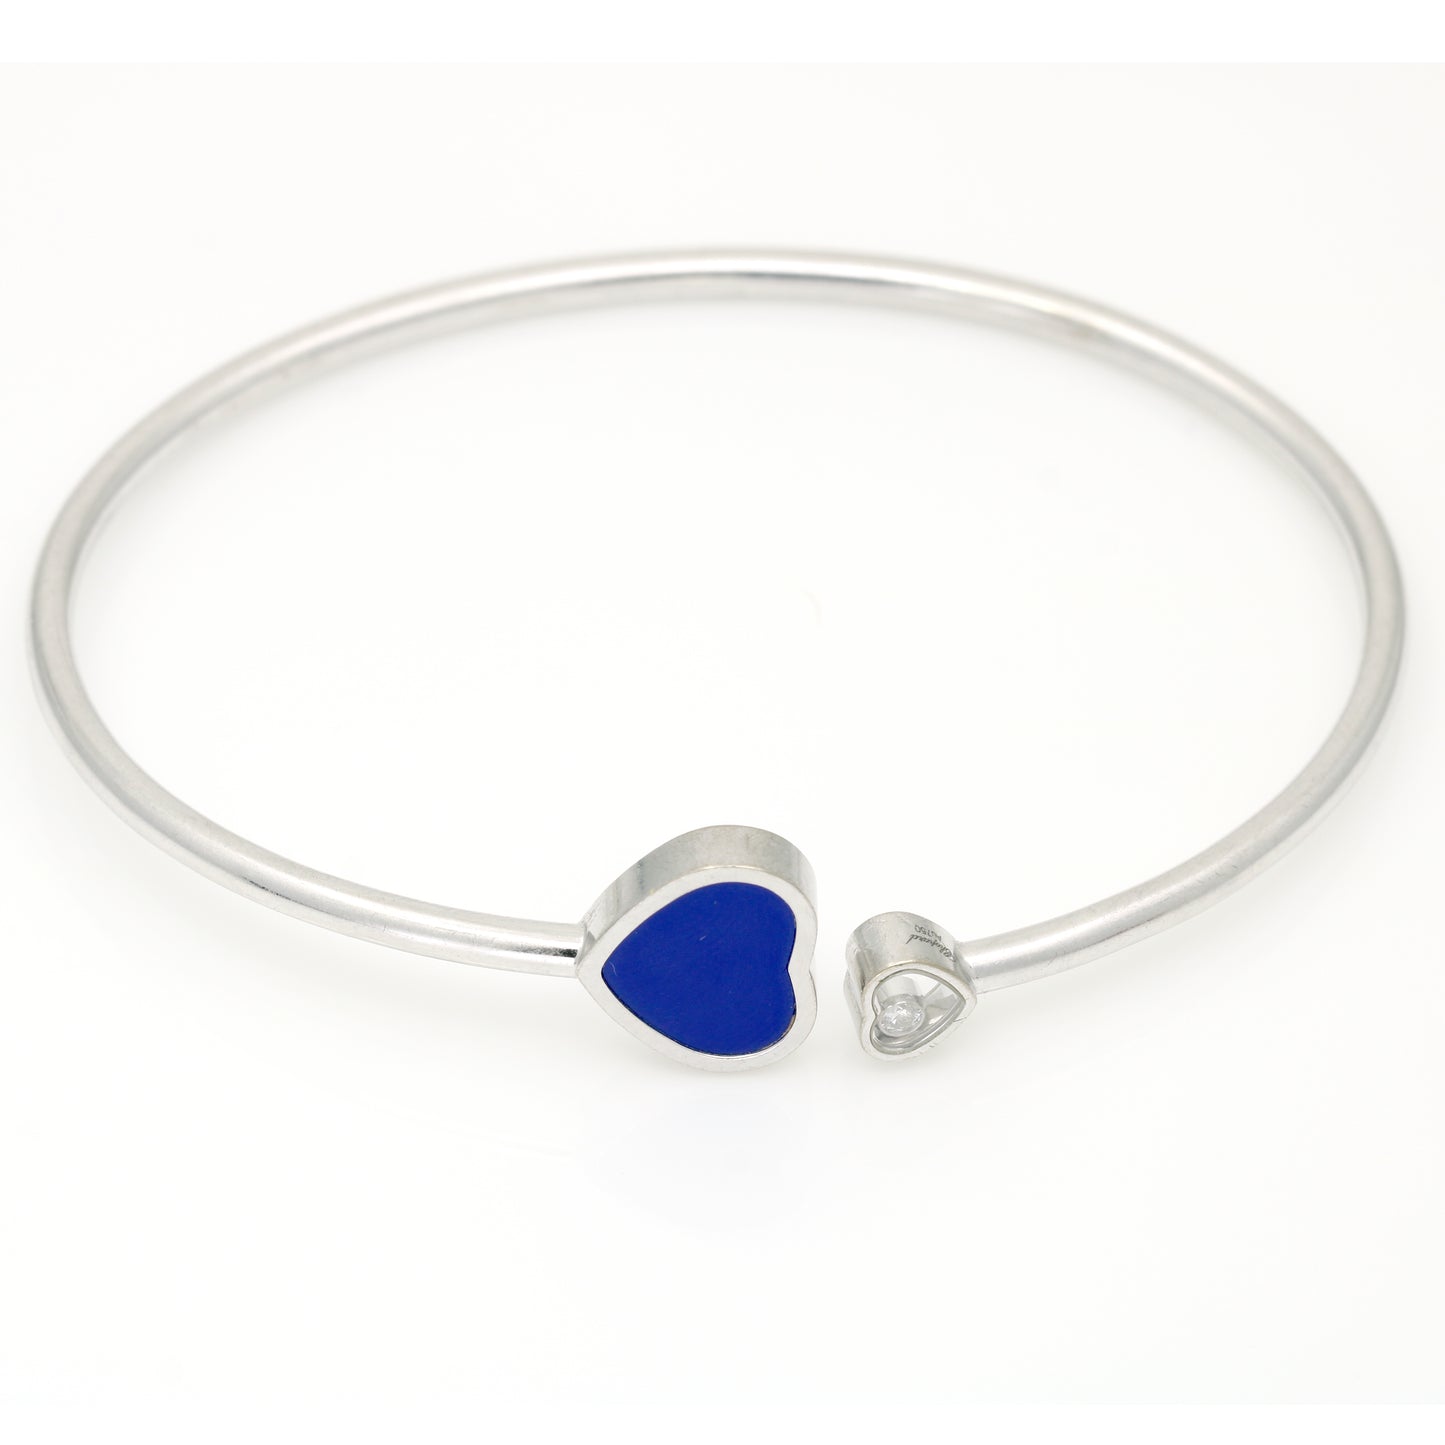 Chopard Happy Hearts Bangle Bracelet - Floating Diamond and Lapis Lazuli